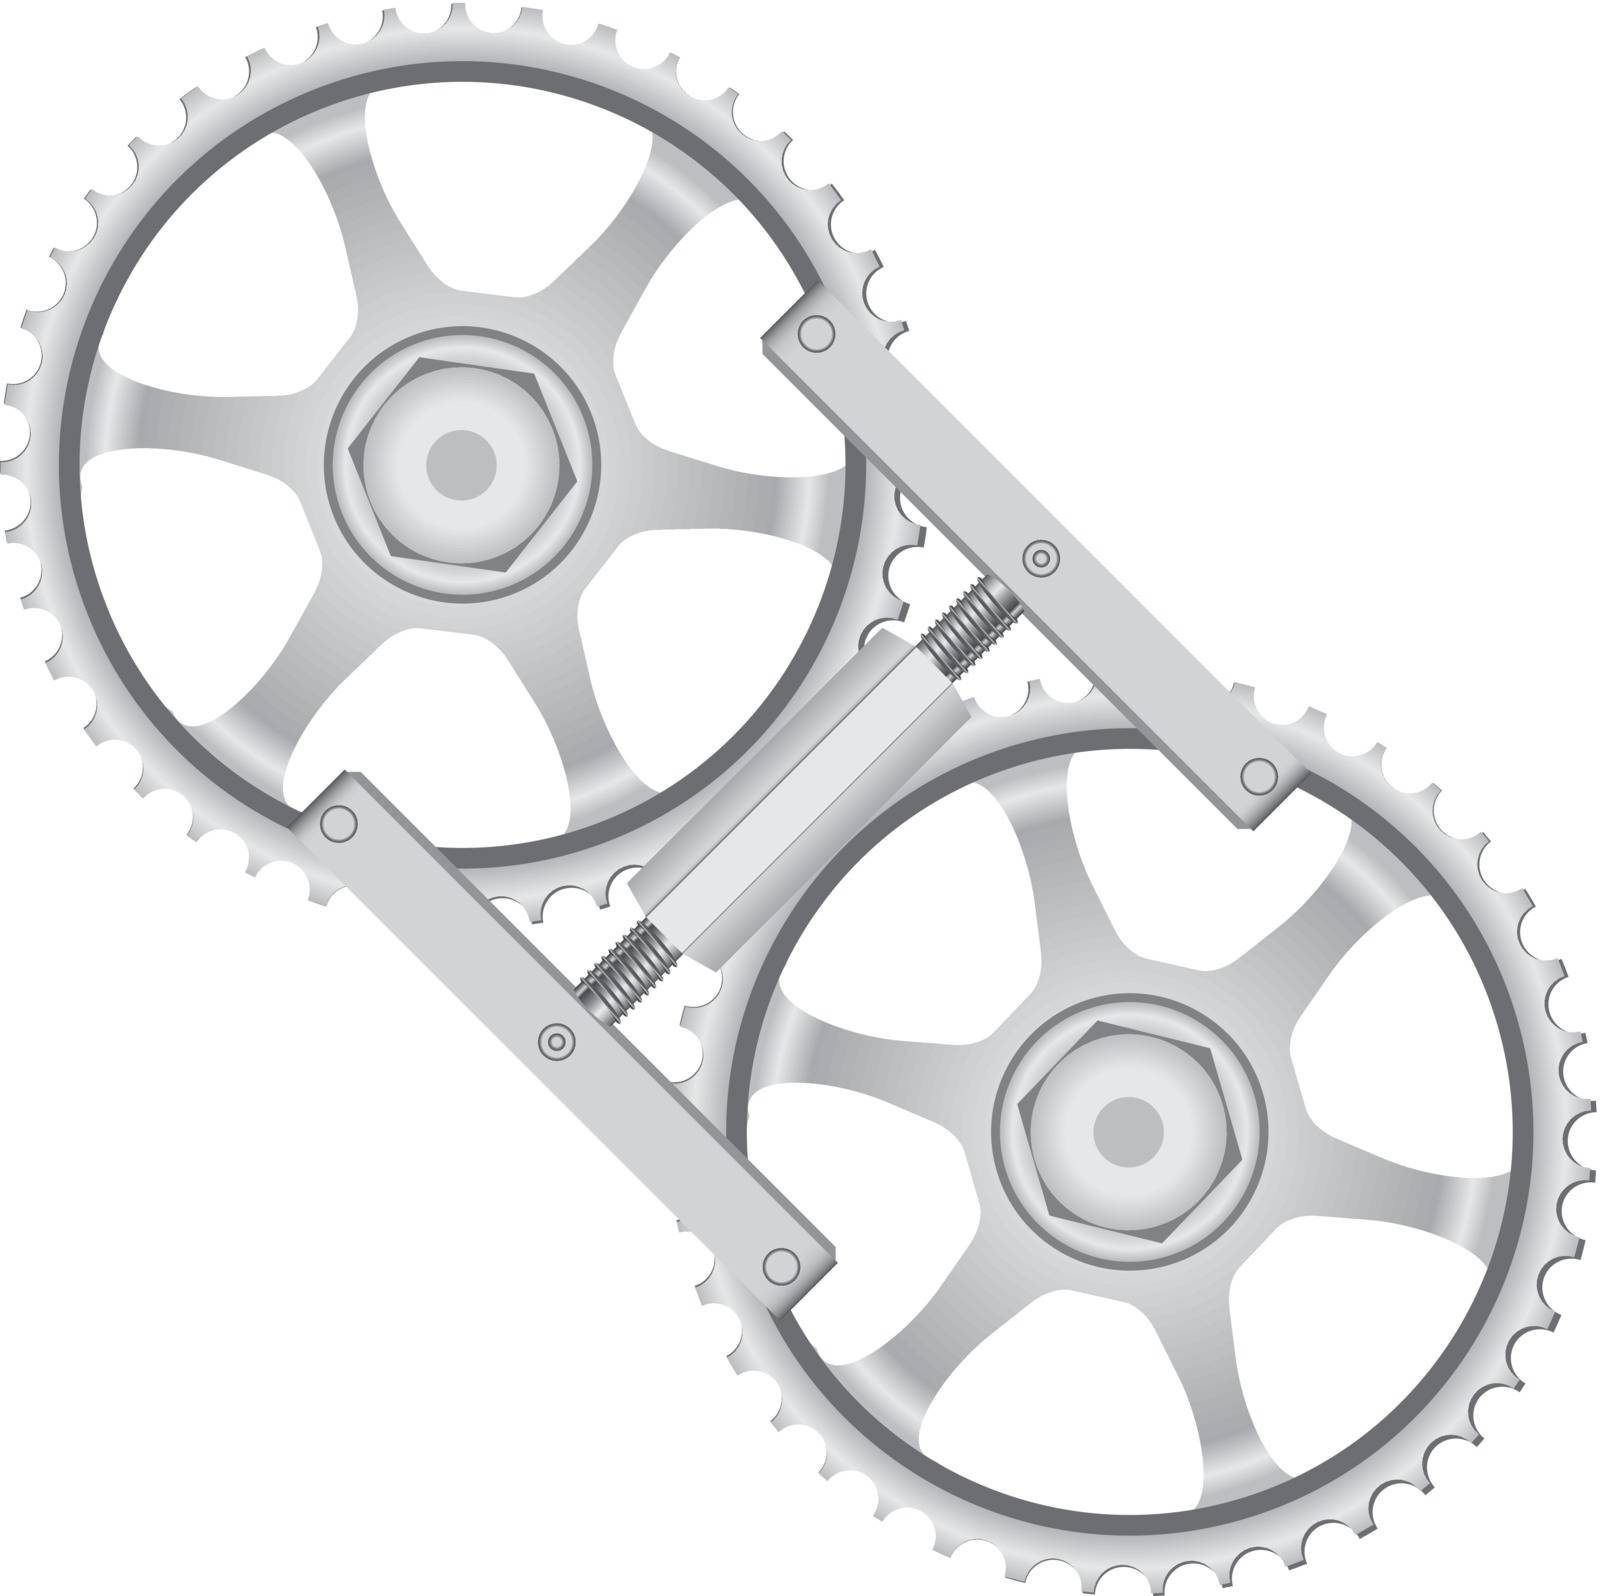 Tool locking gears by VIPDesignUSA